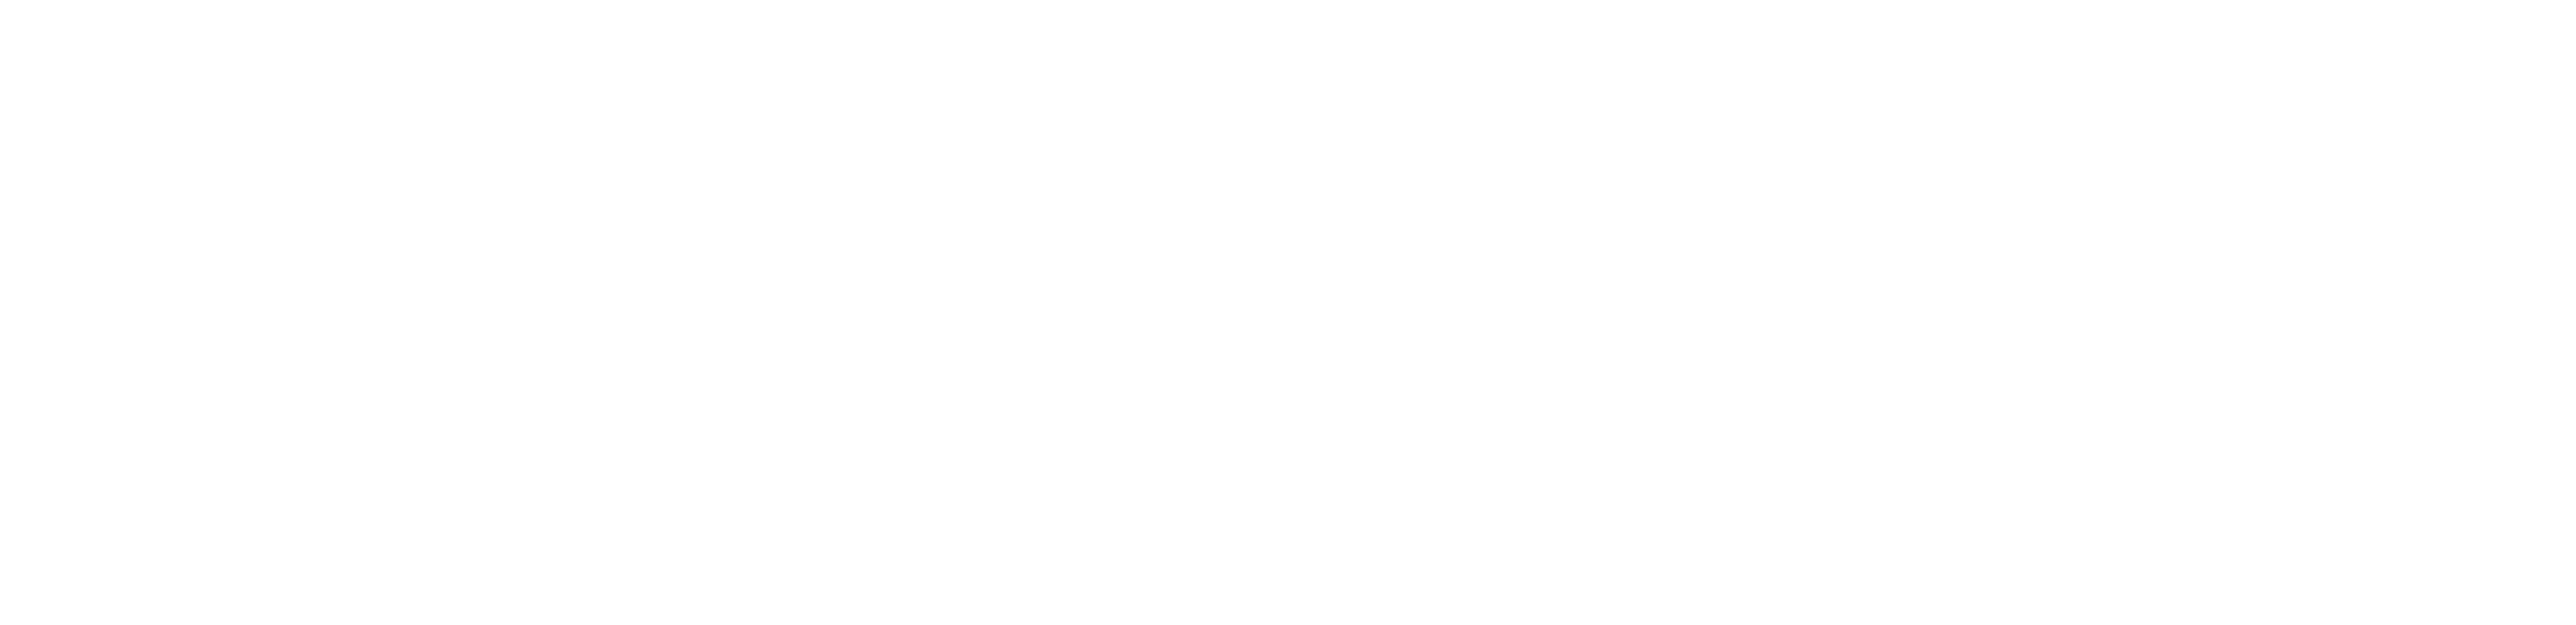 "The World's Fairest"